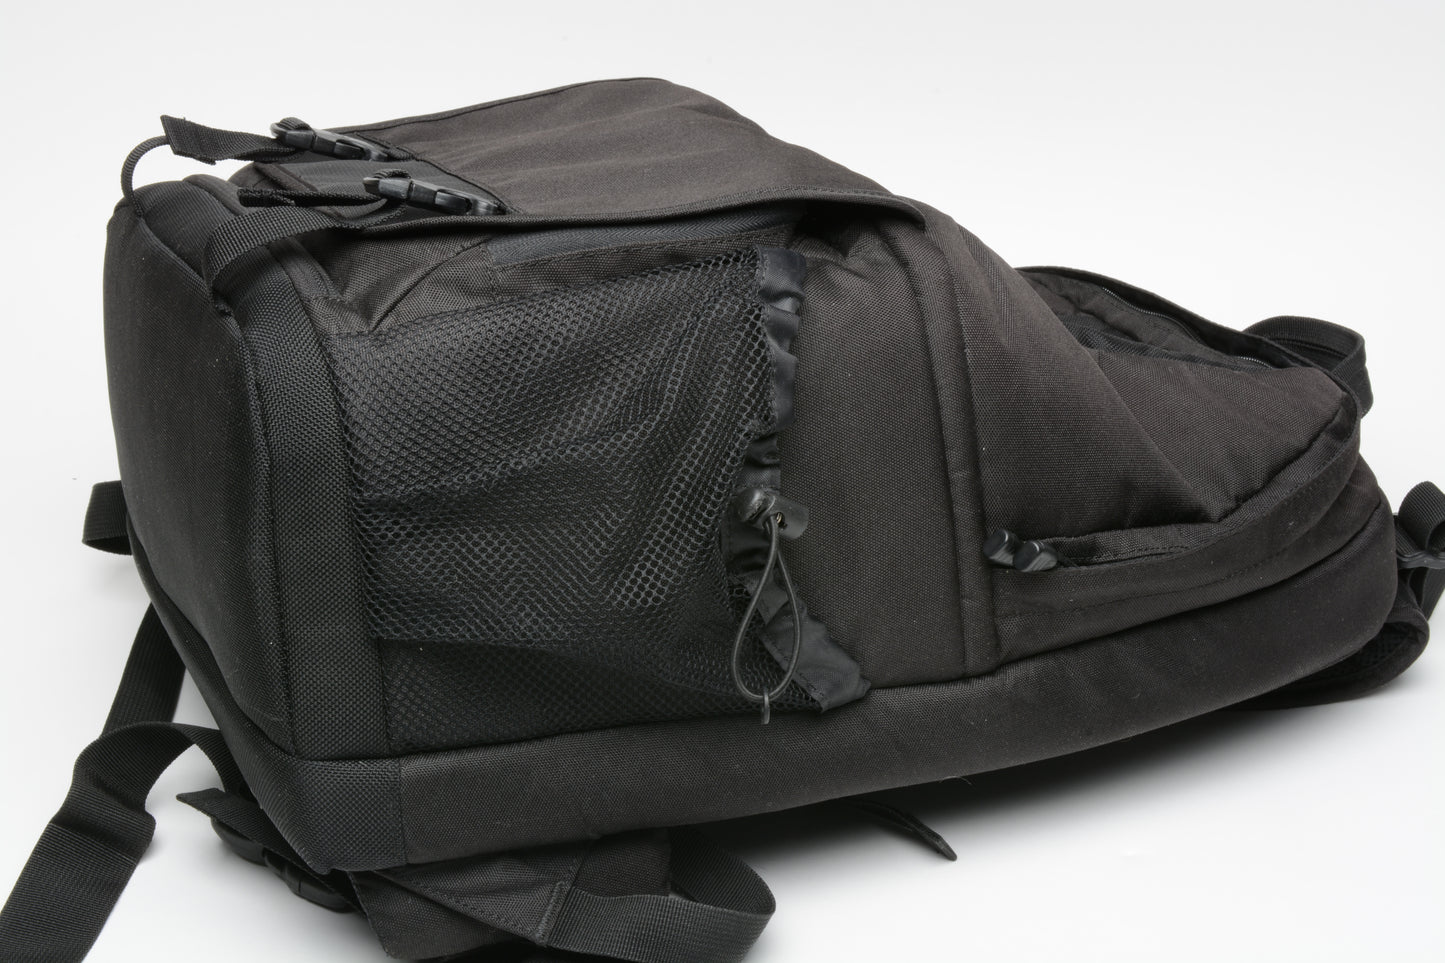 Lowepro Fastpack 350 Large Camera Backpack - Black - Very clean!